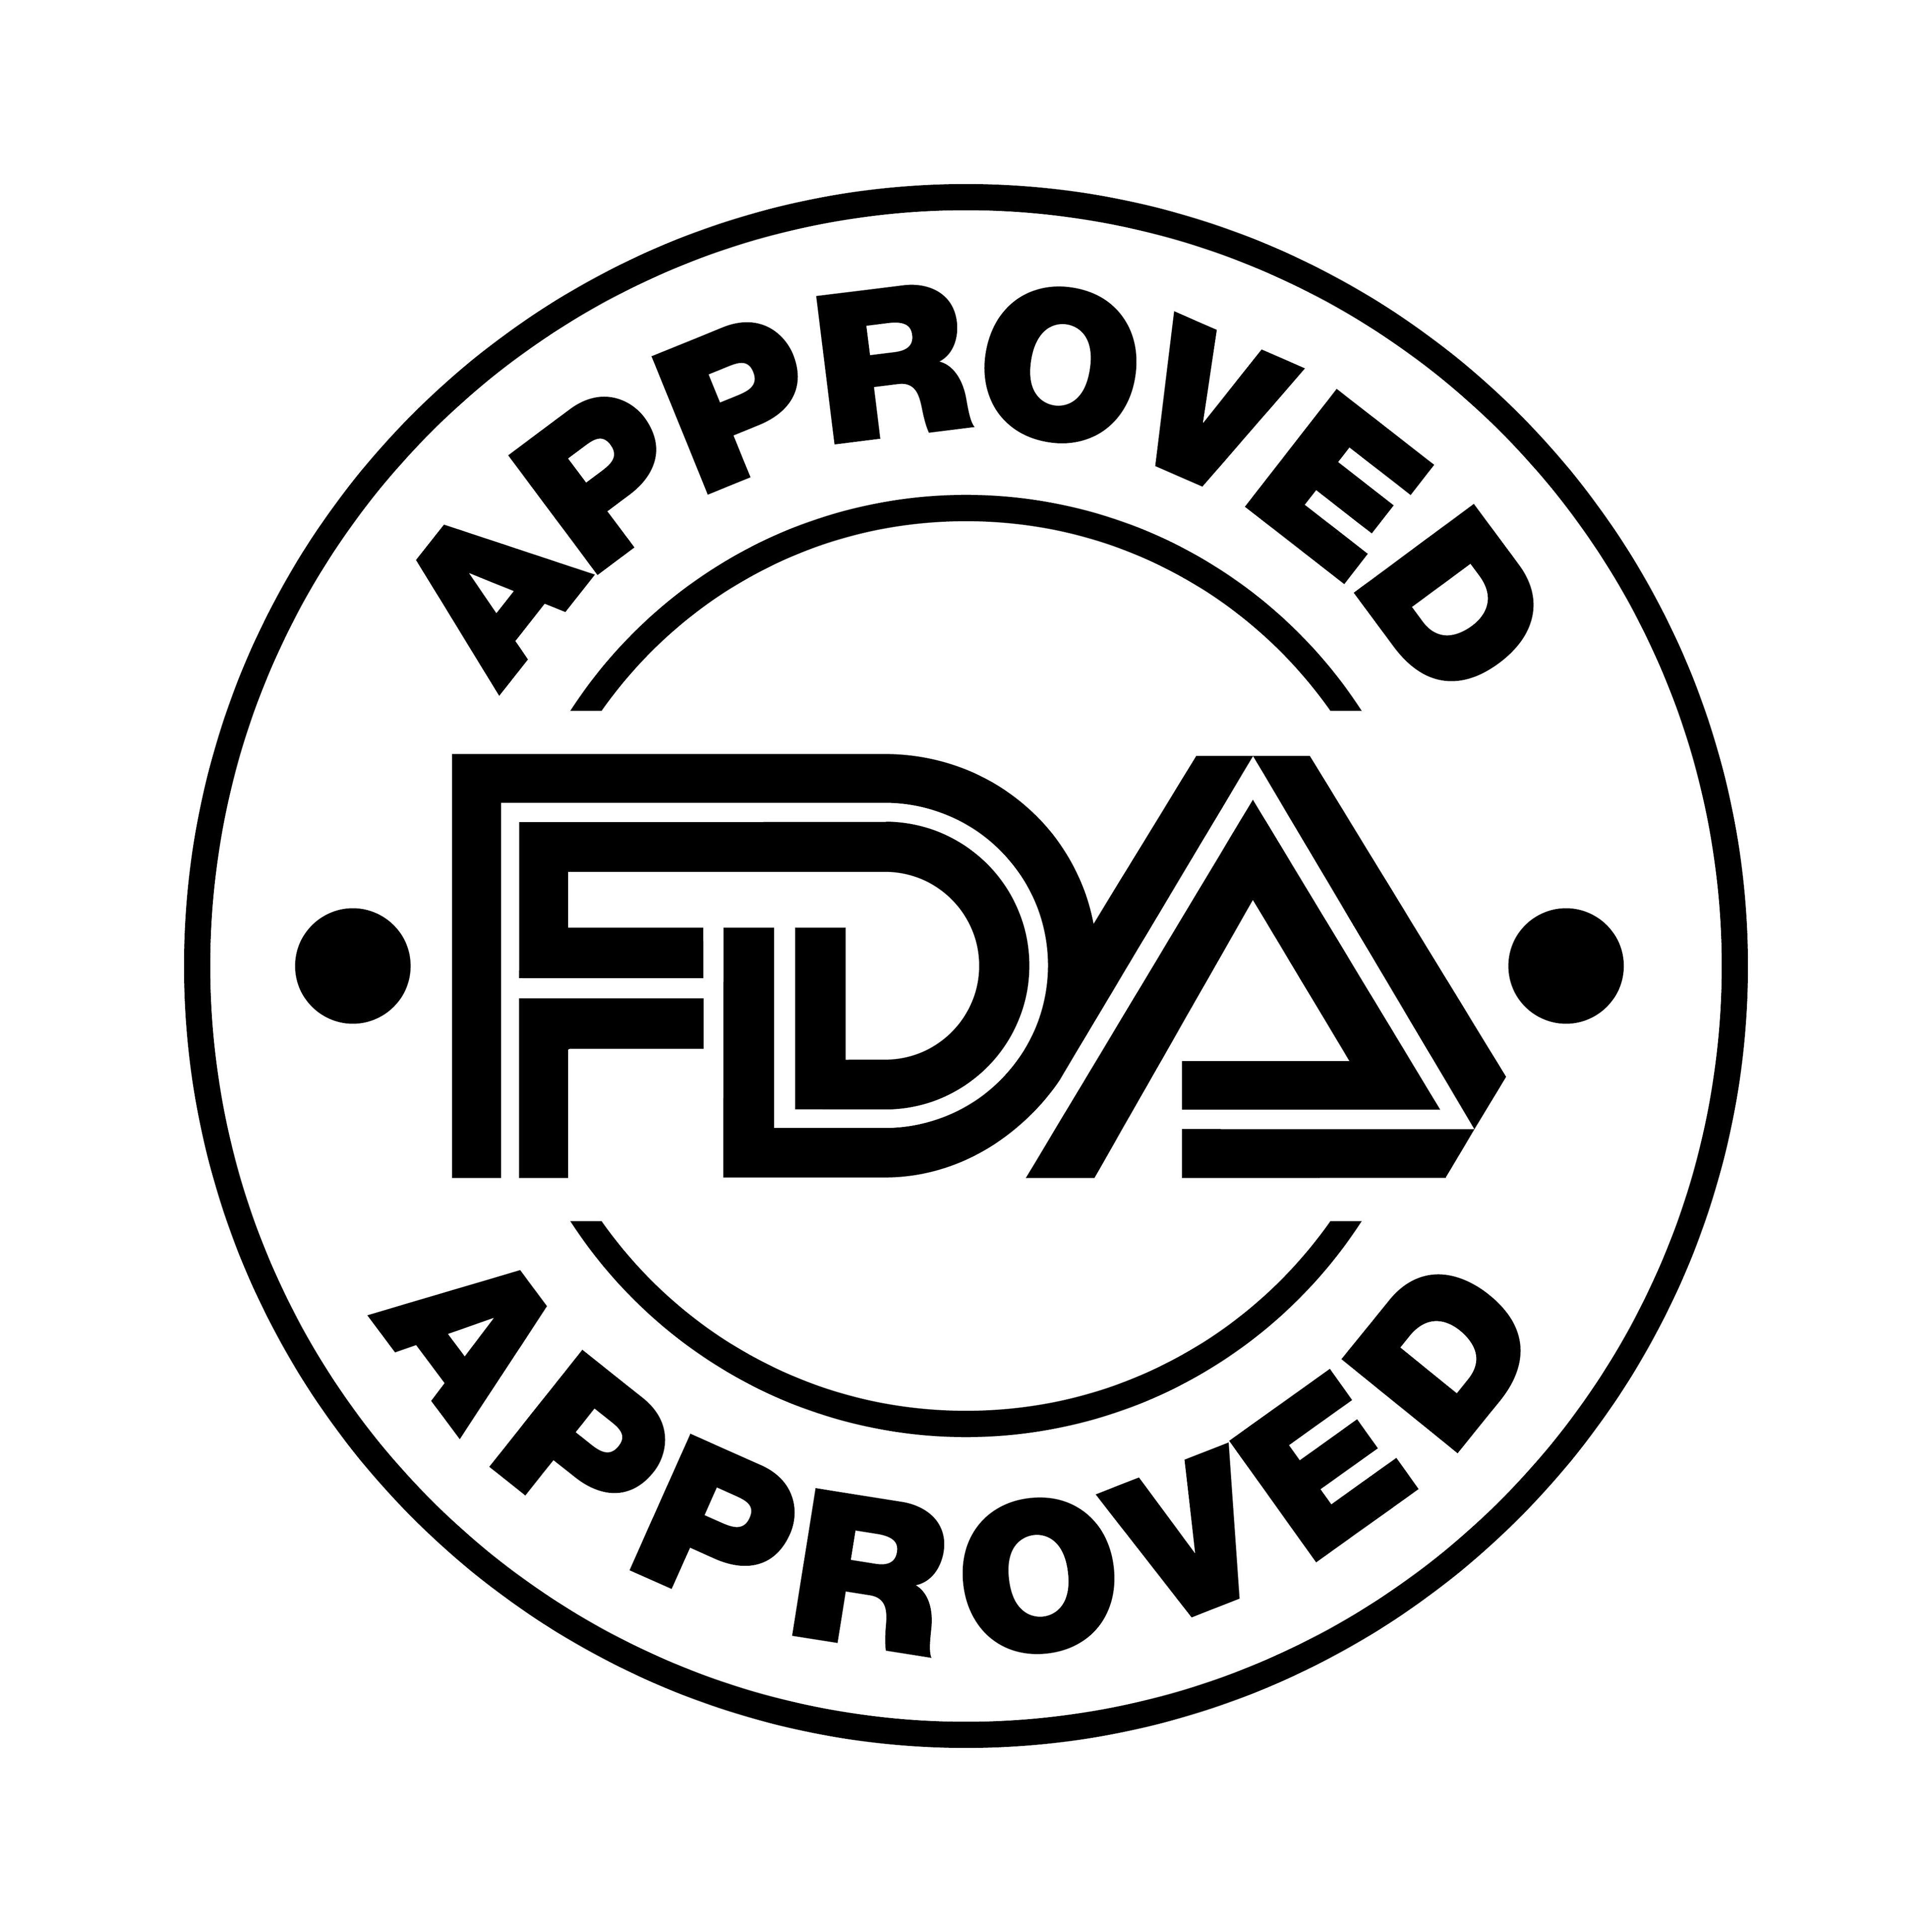 U.S. Food and Drug Administration FDA approved vector stamp | Image credit: Calin - stock.adobe.com